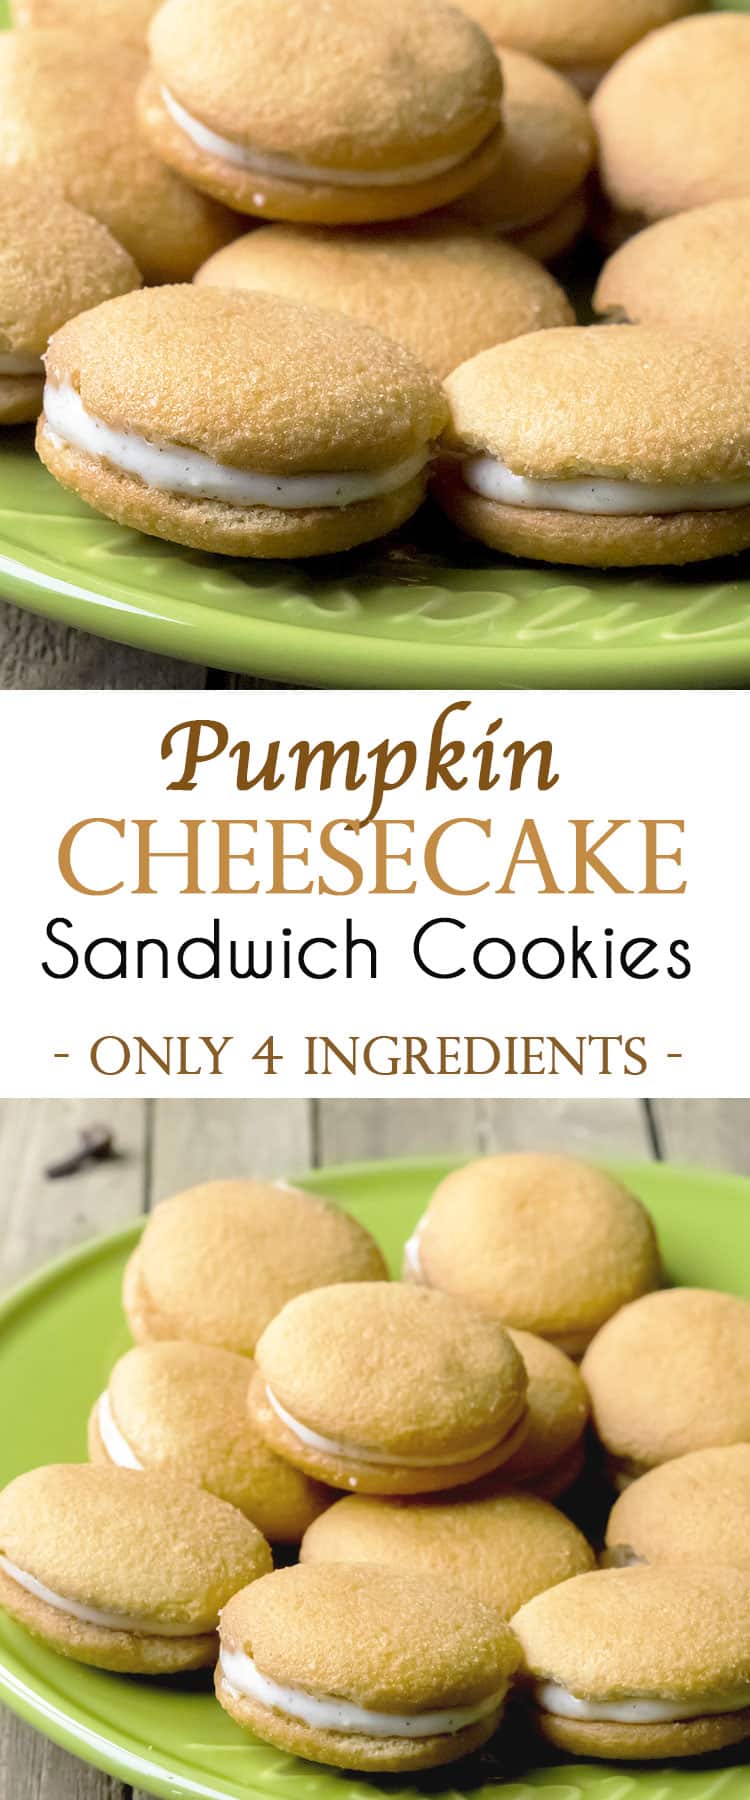 pumpkin-cheesecake-sandwich-cookies-recipe-4-ingredients